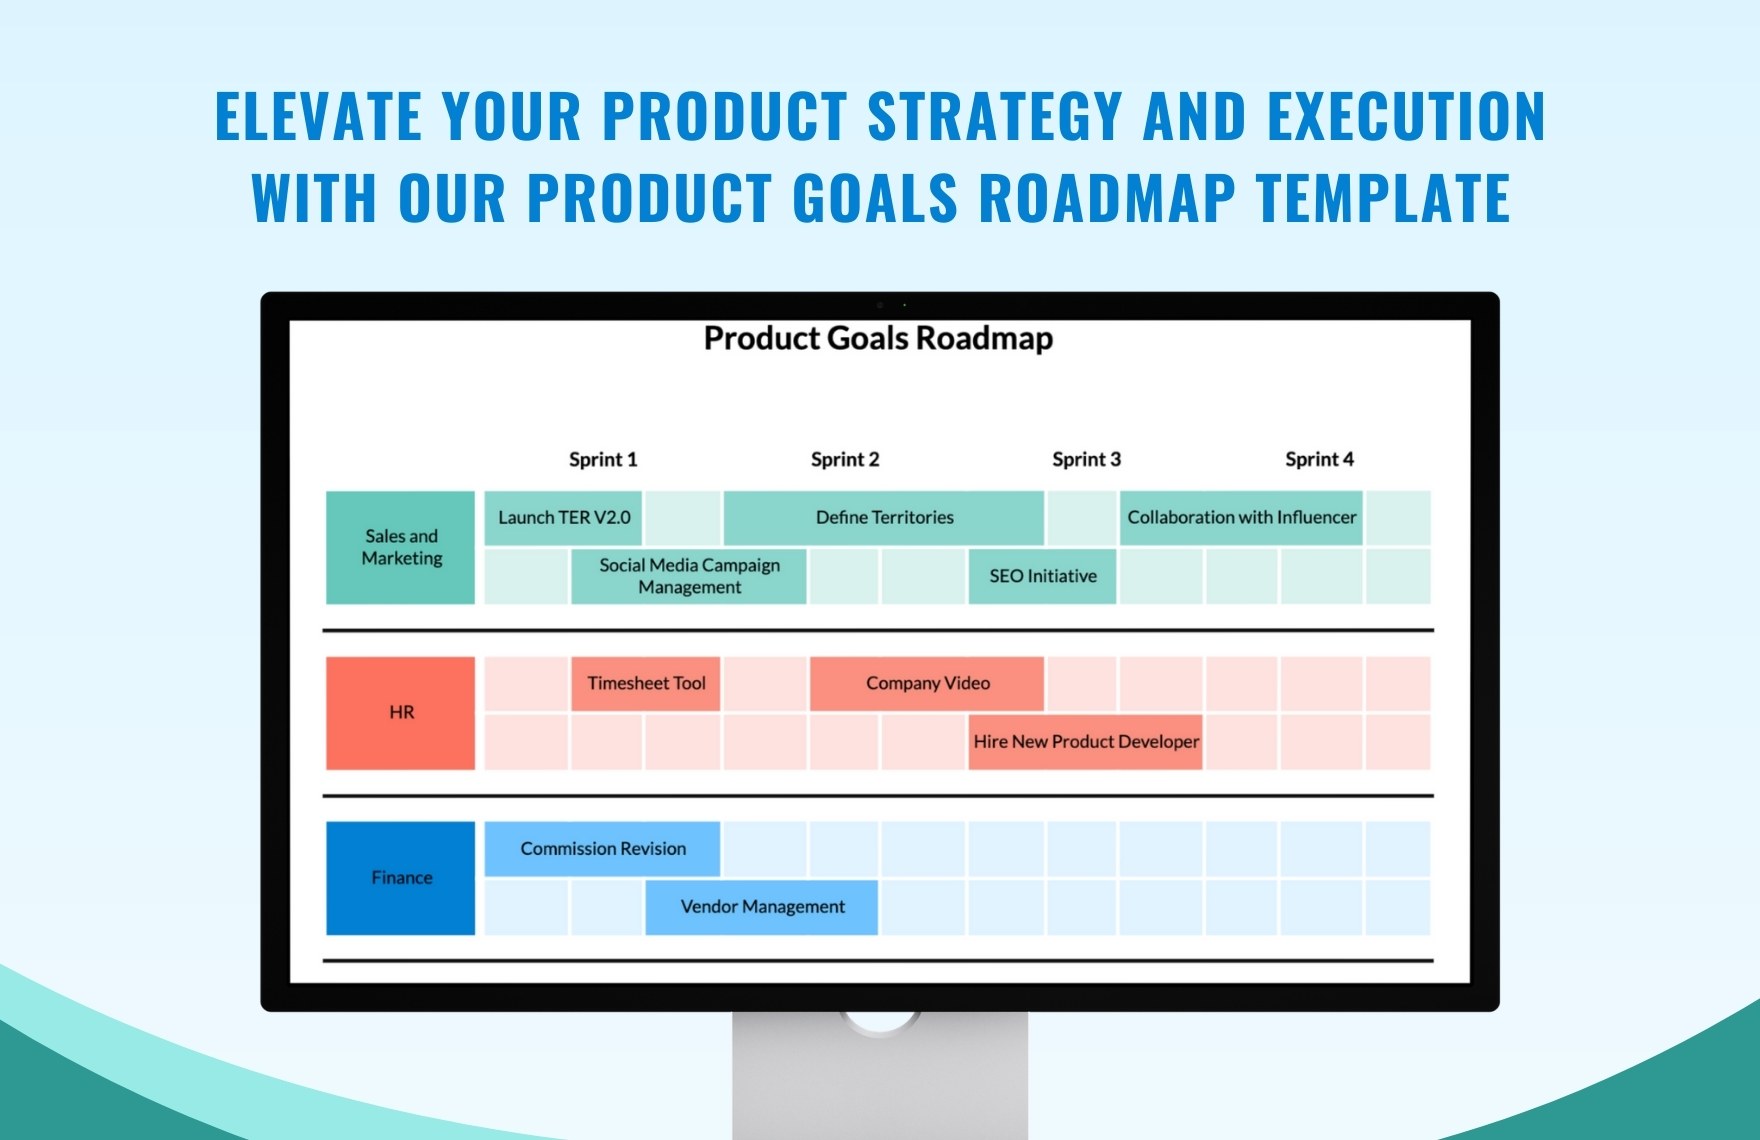 Product Goals Roadmap Template